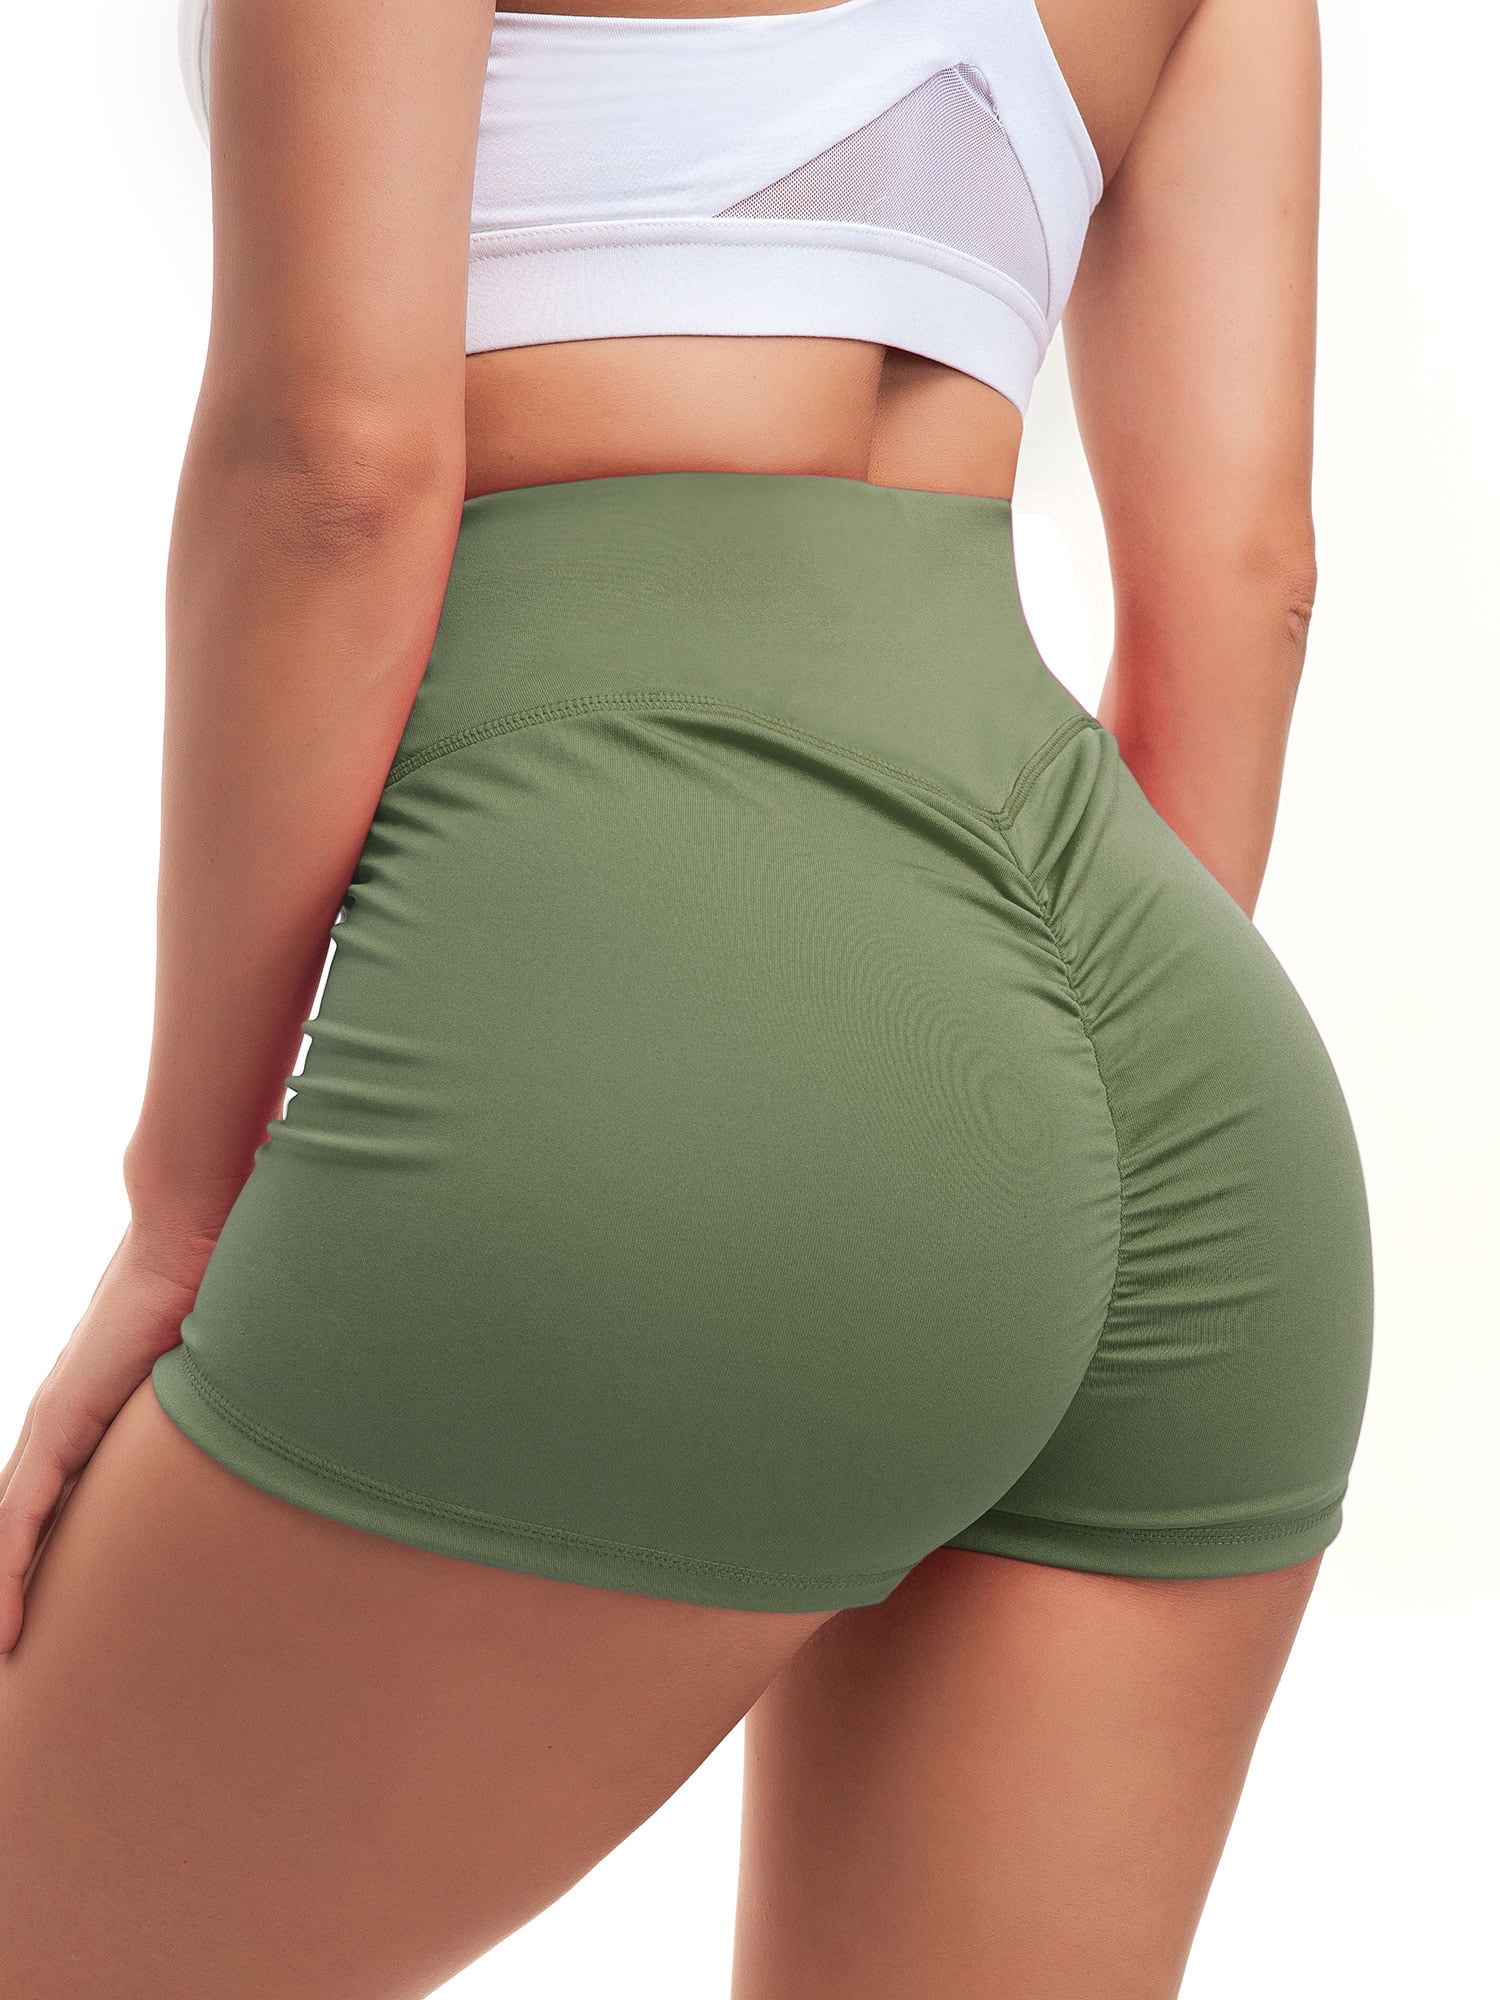 SELX Women Yoga Stretchy Pockets Butt Lift High Rise Beach Shorts